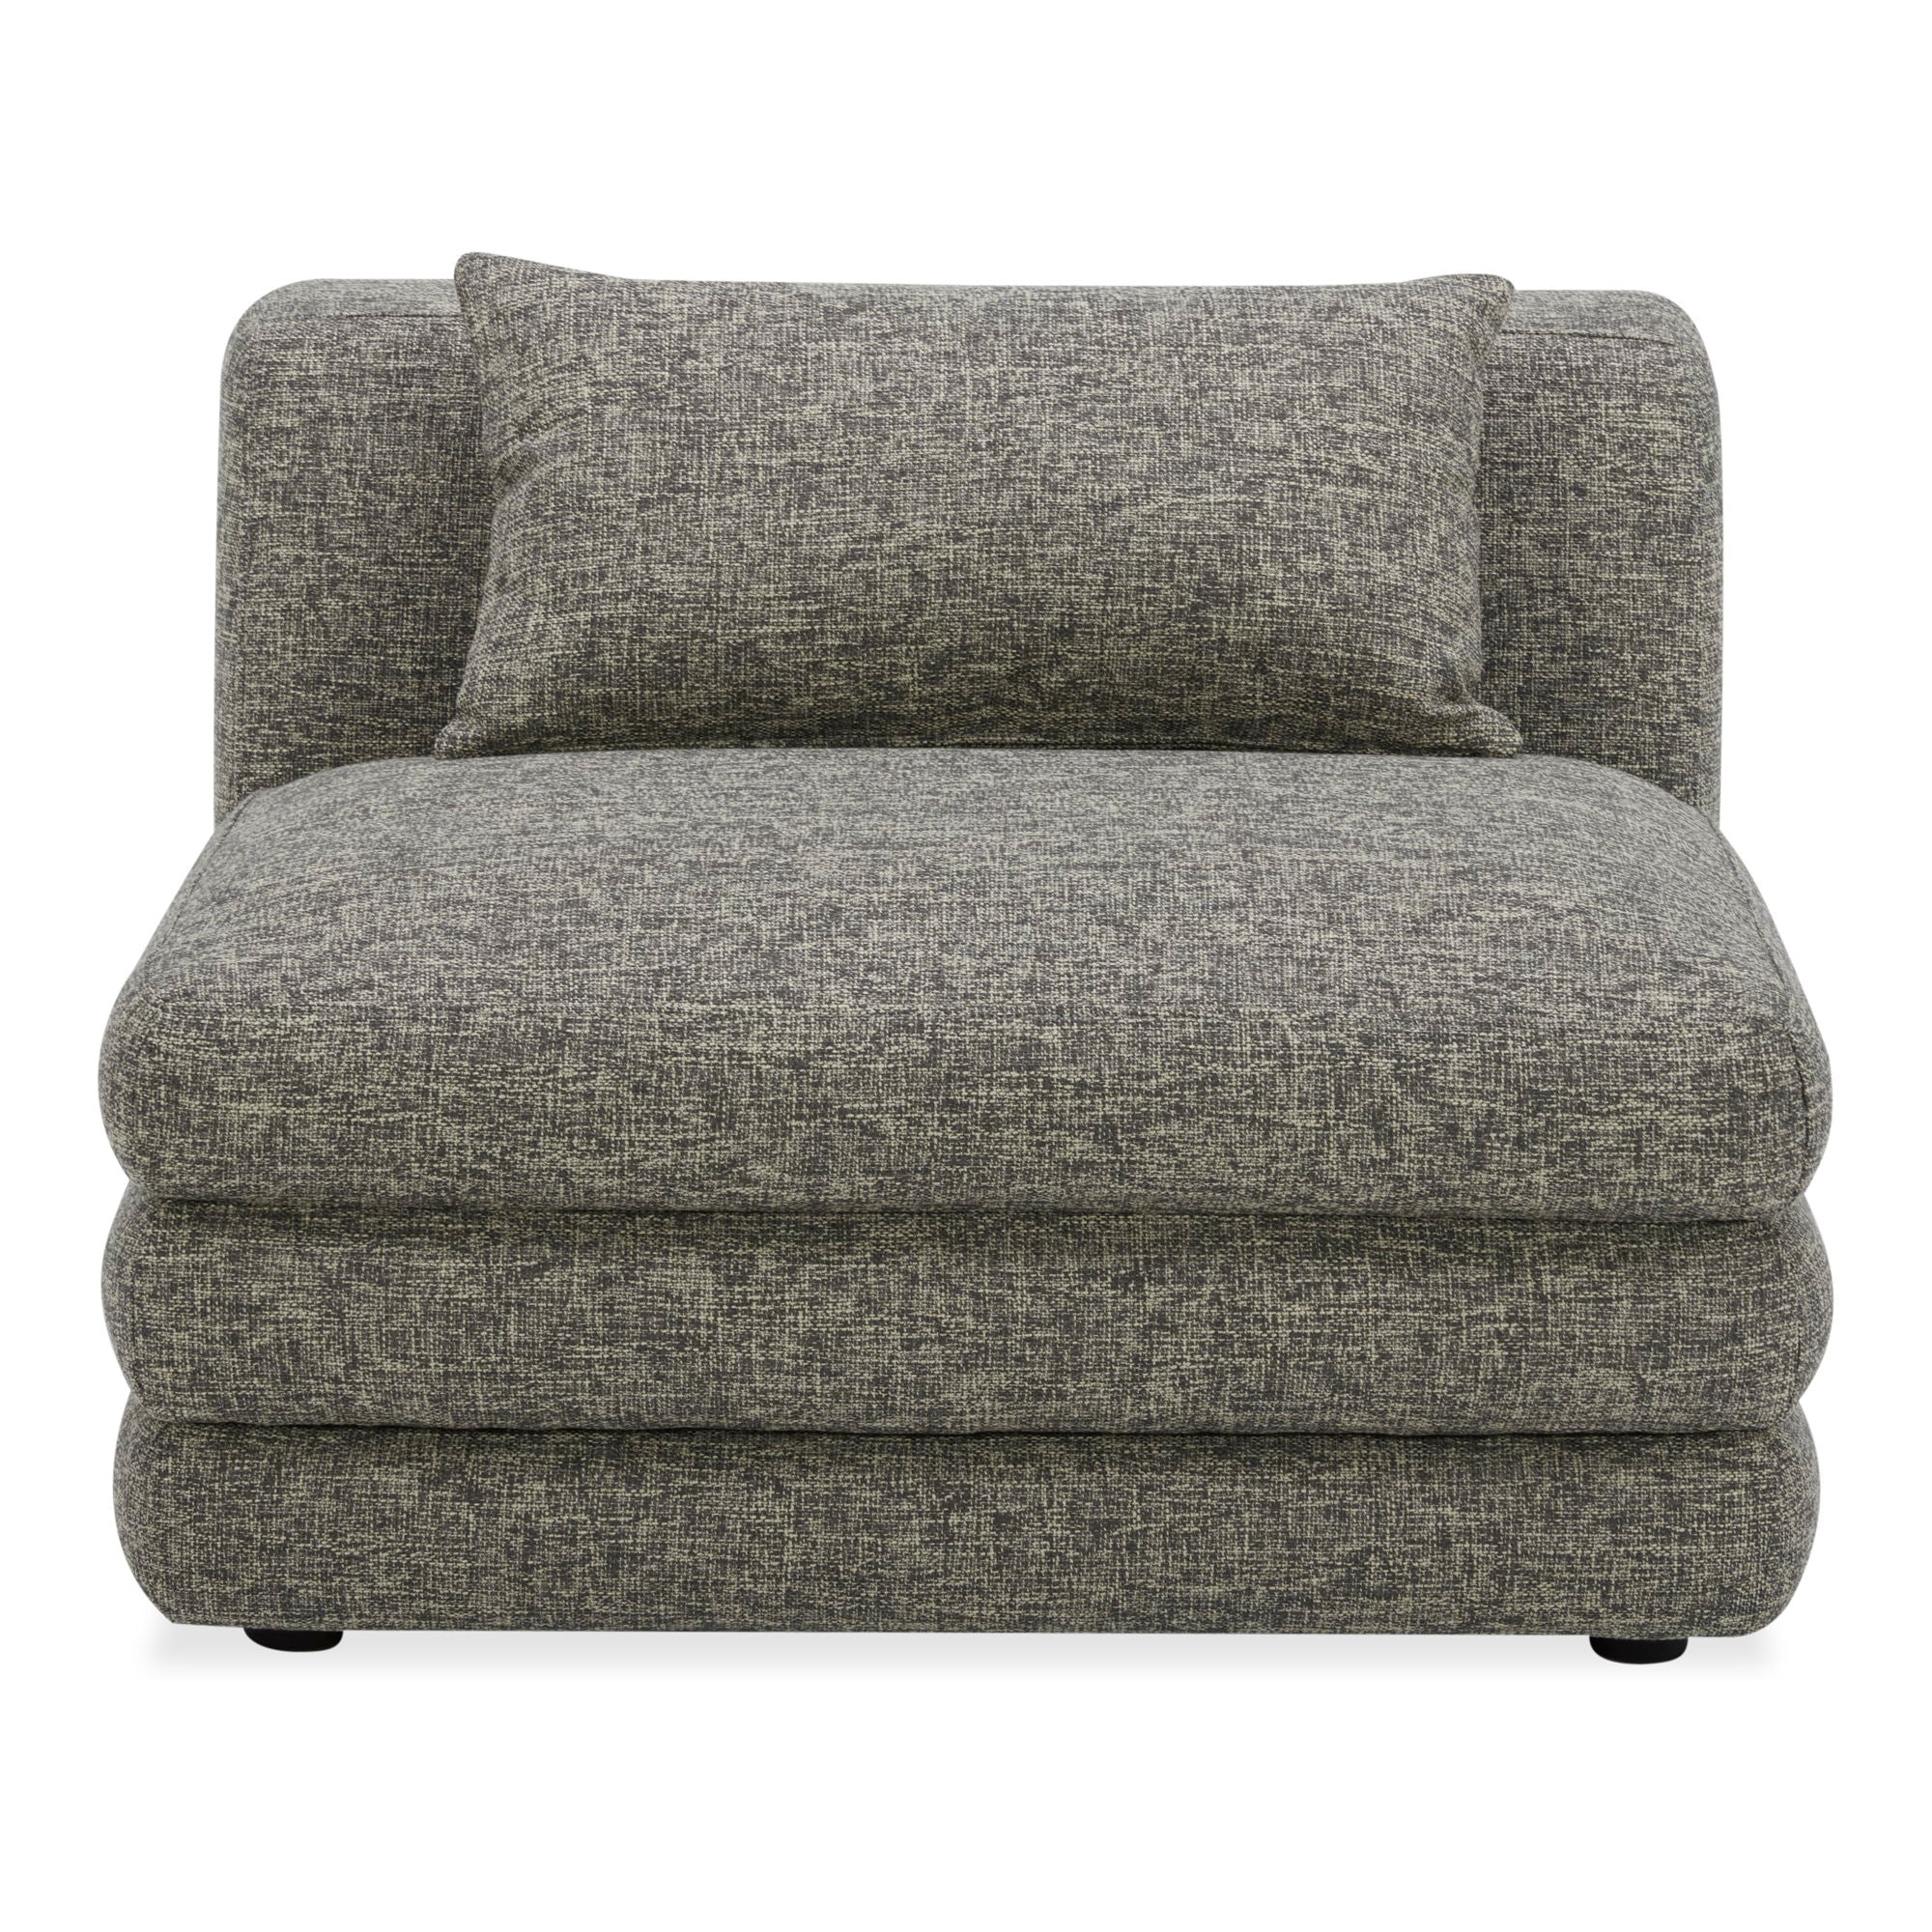 Lowtide - Slipper Chair - Gray